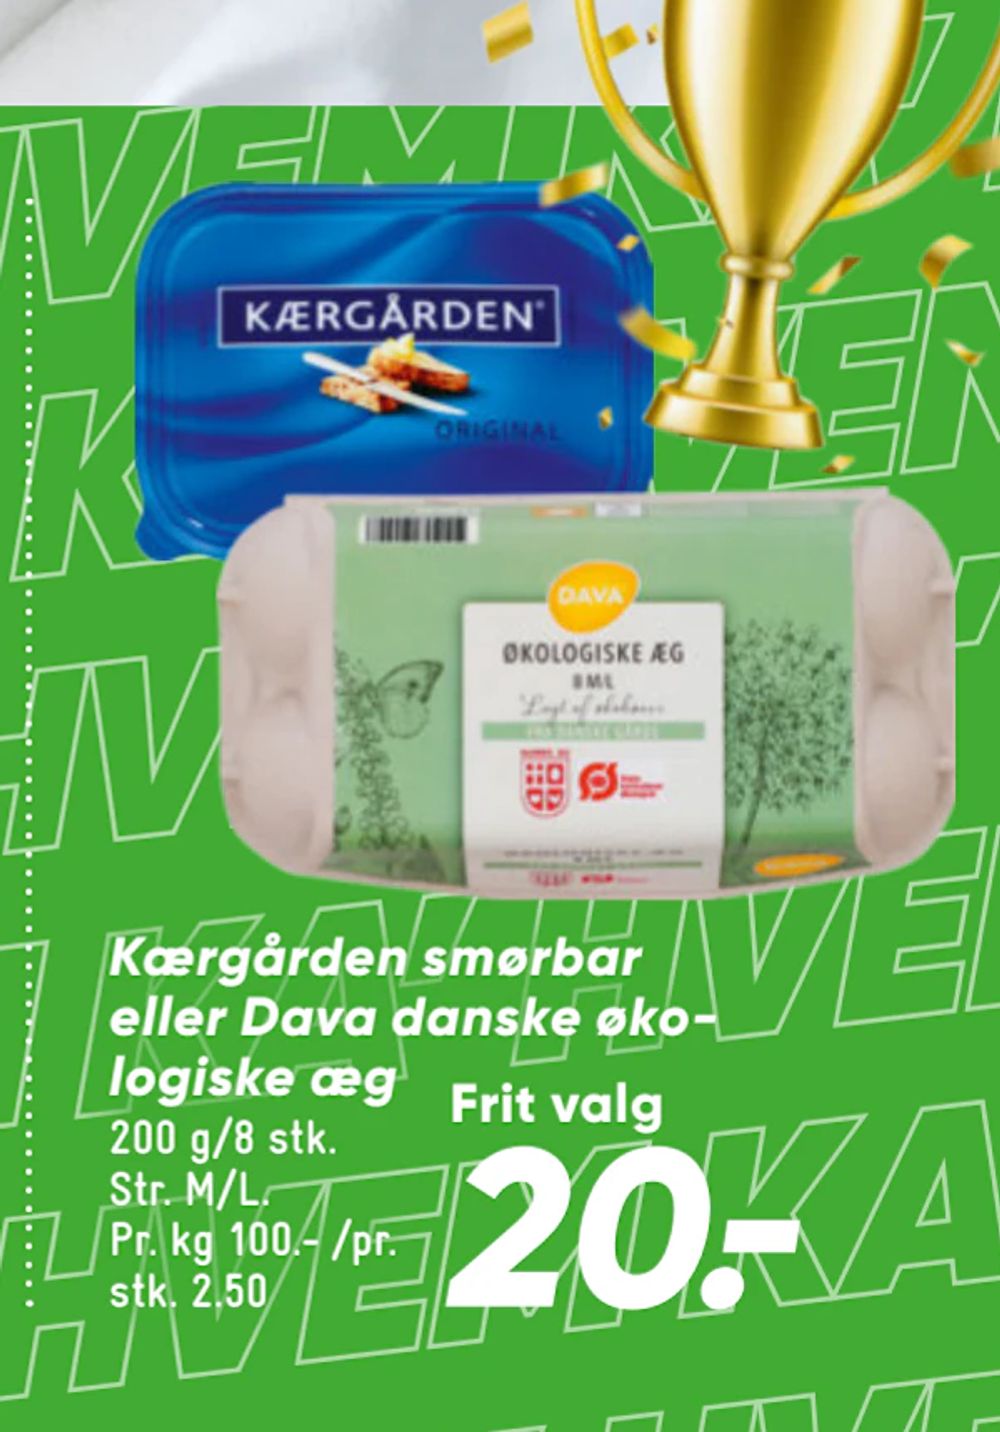 Tilbud på Kærgården smørbar eller Dava danske økolo giske æg fra Bilka til 20 kr.